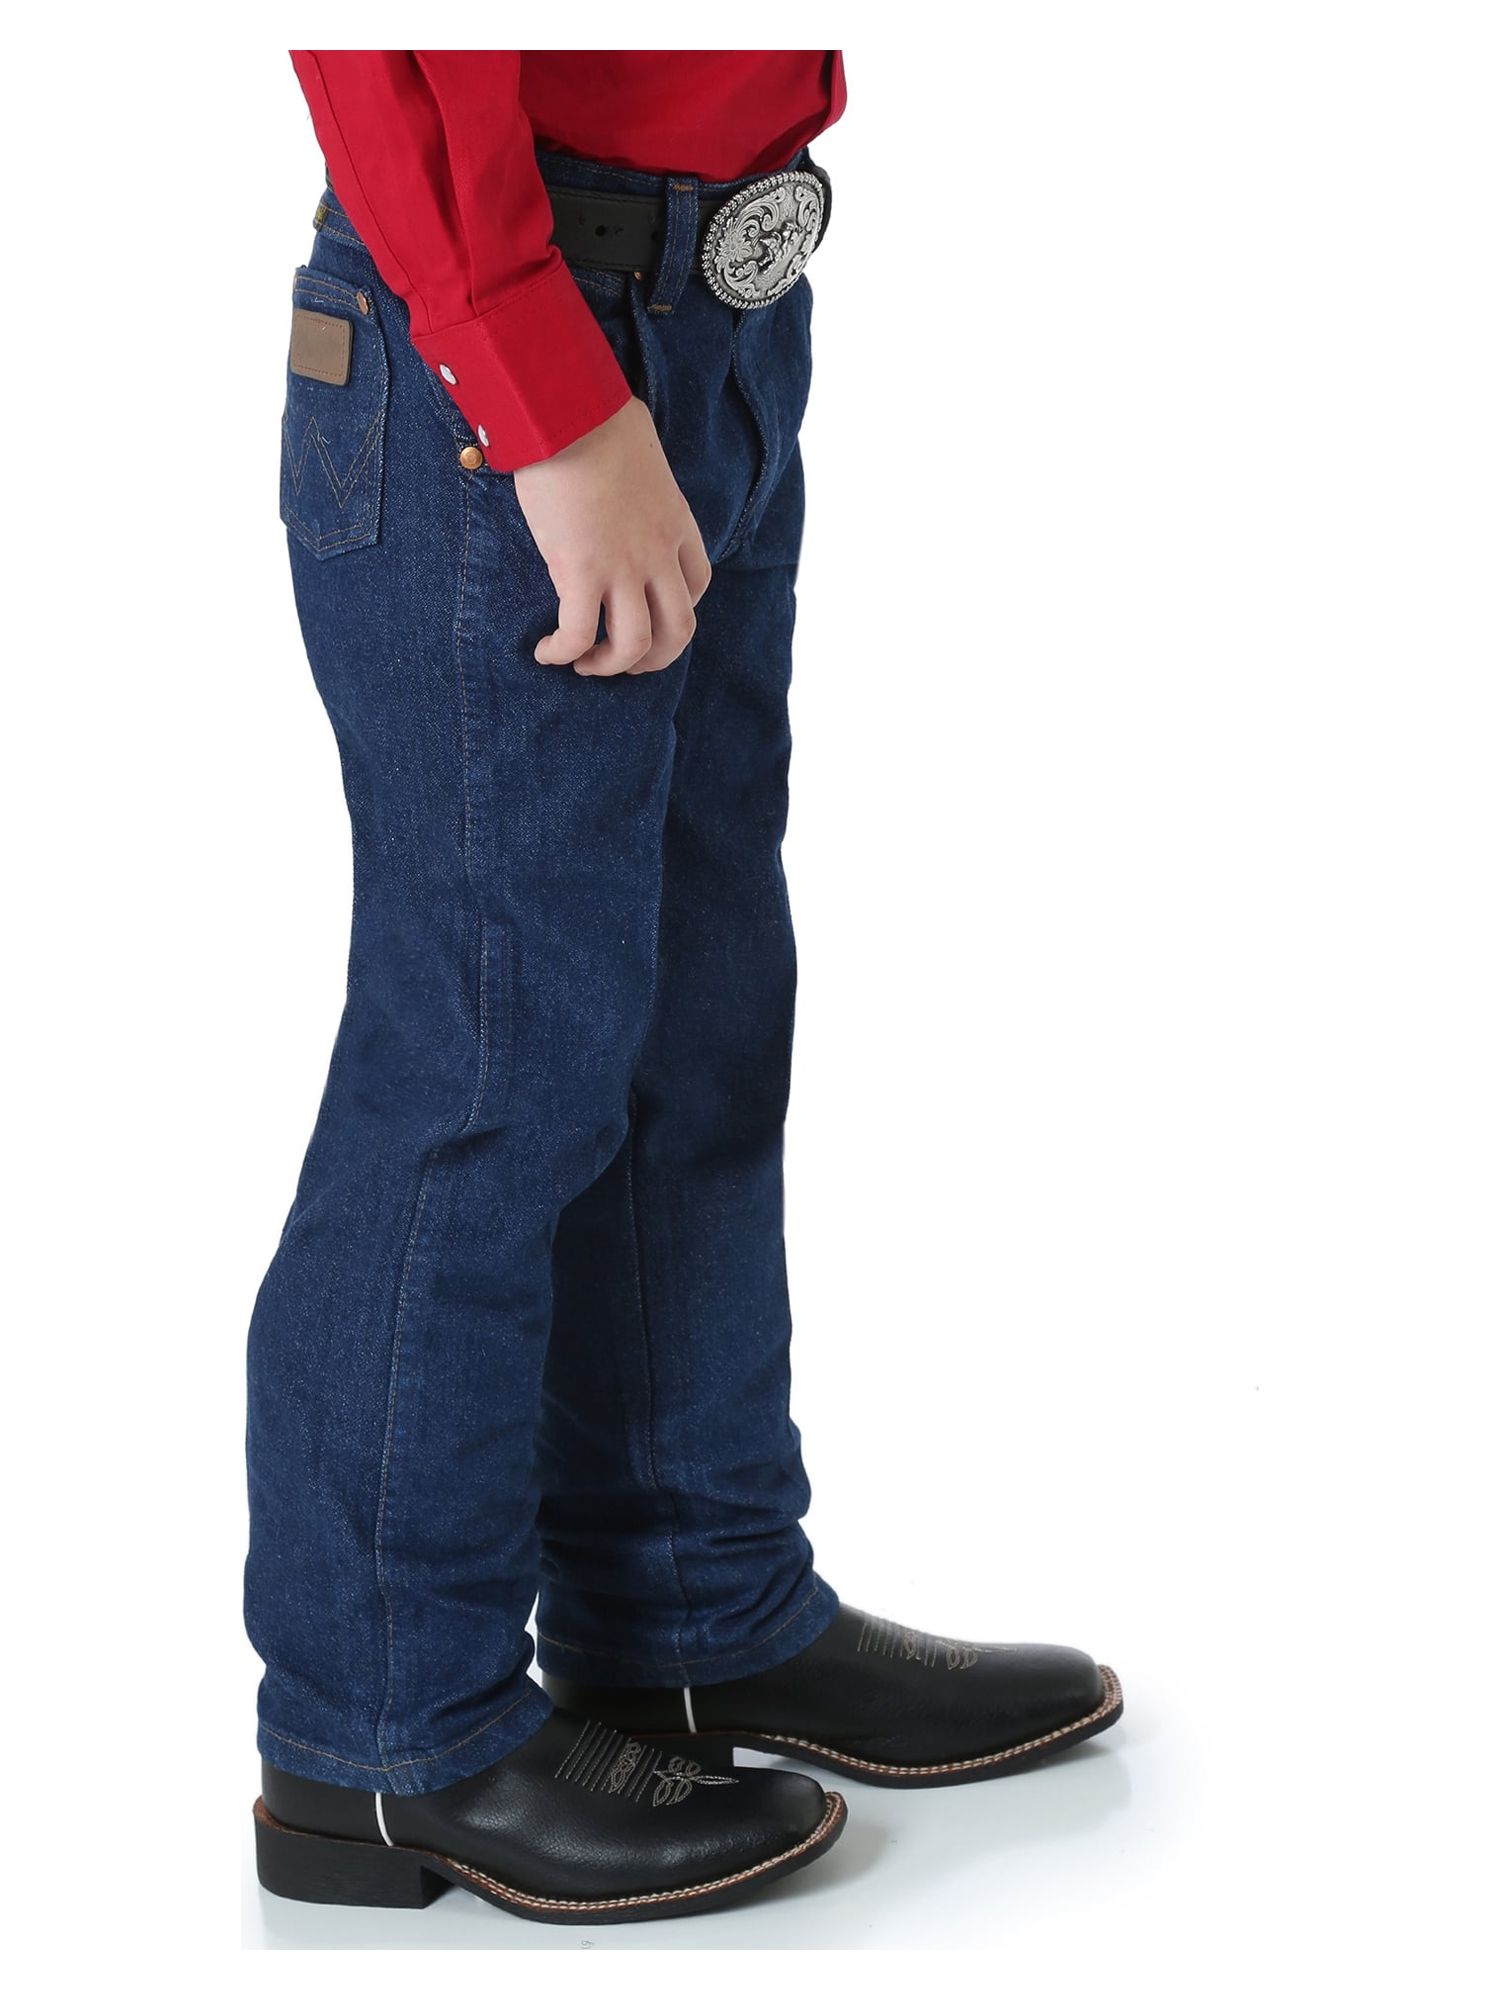 Wrangler Boys Cowboy Cut Original Fit Jeans, Sizes 4-7 - image 4 of 4